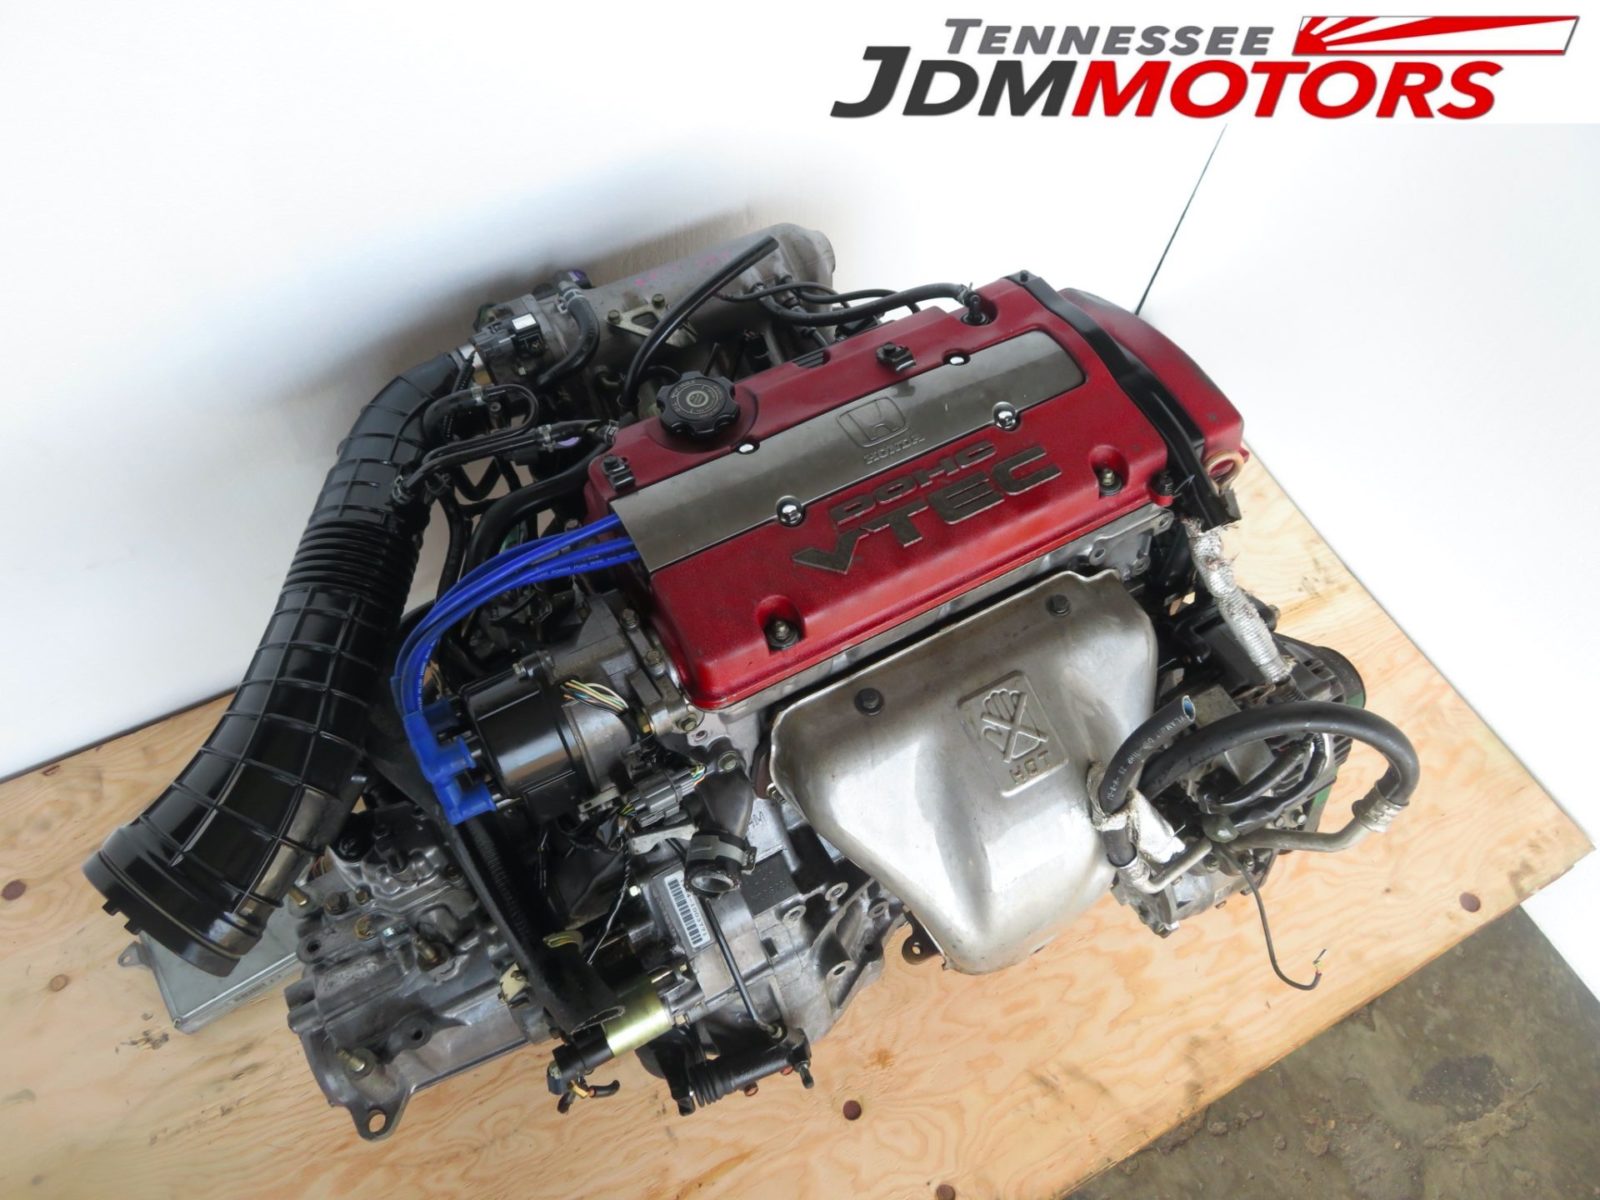 Jdm Honda H22a Vtec Engine Euro R Lsd Transmission T2w4 Header 98 02 Honda Accord Prelude Tennessee Jdm Motors